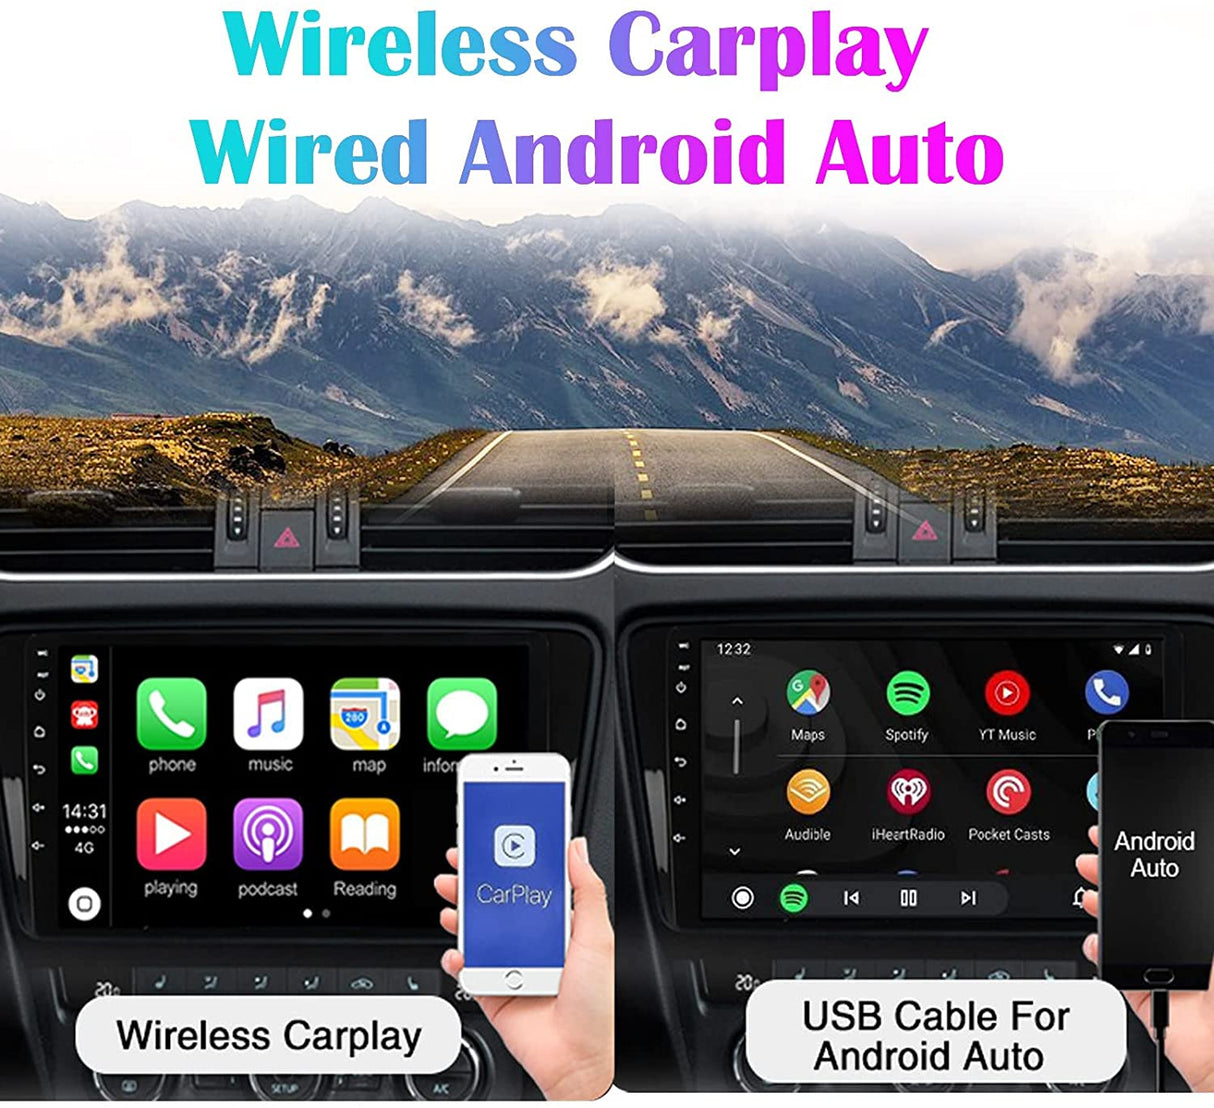 Radio de coche inalámbrica CarPlay de 10 pulgadas Binize con aplicación de duplicación de teléfono